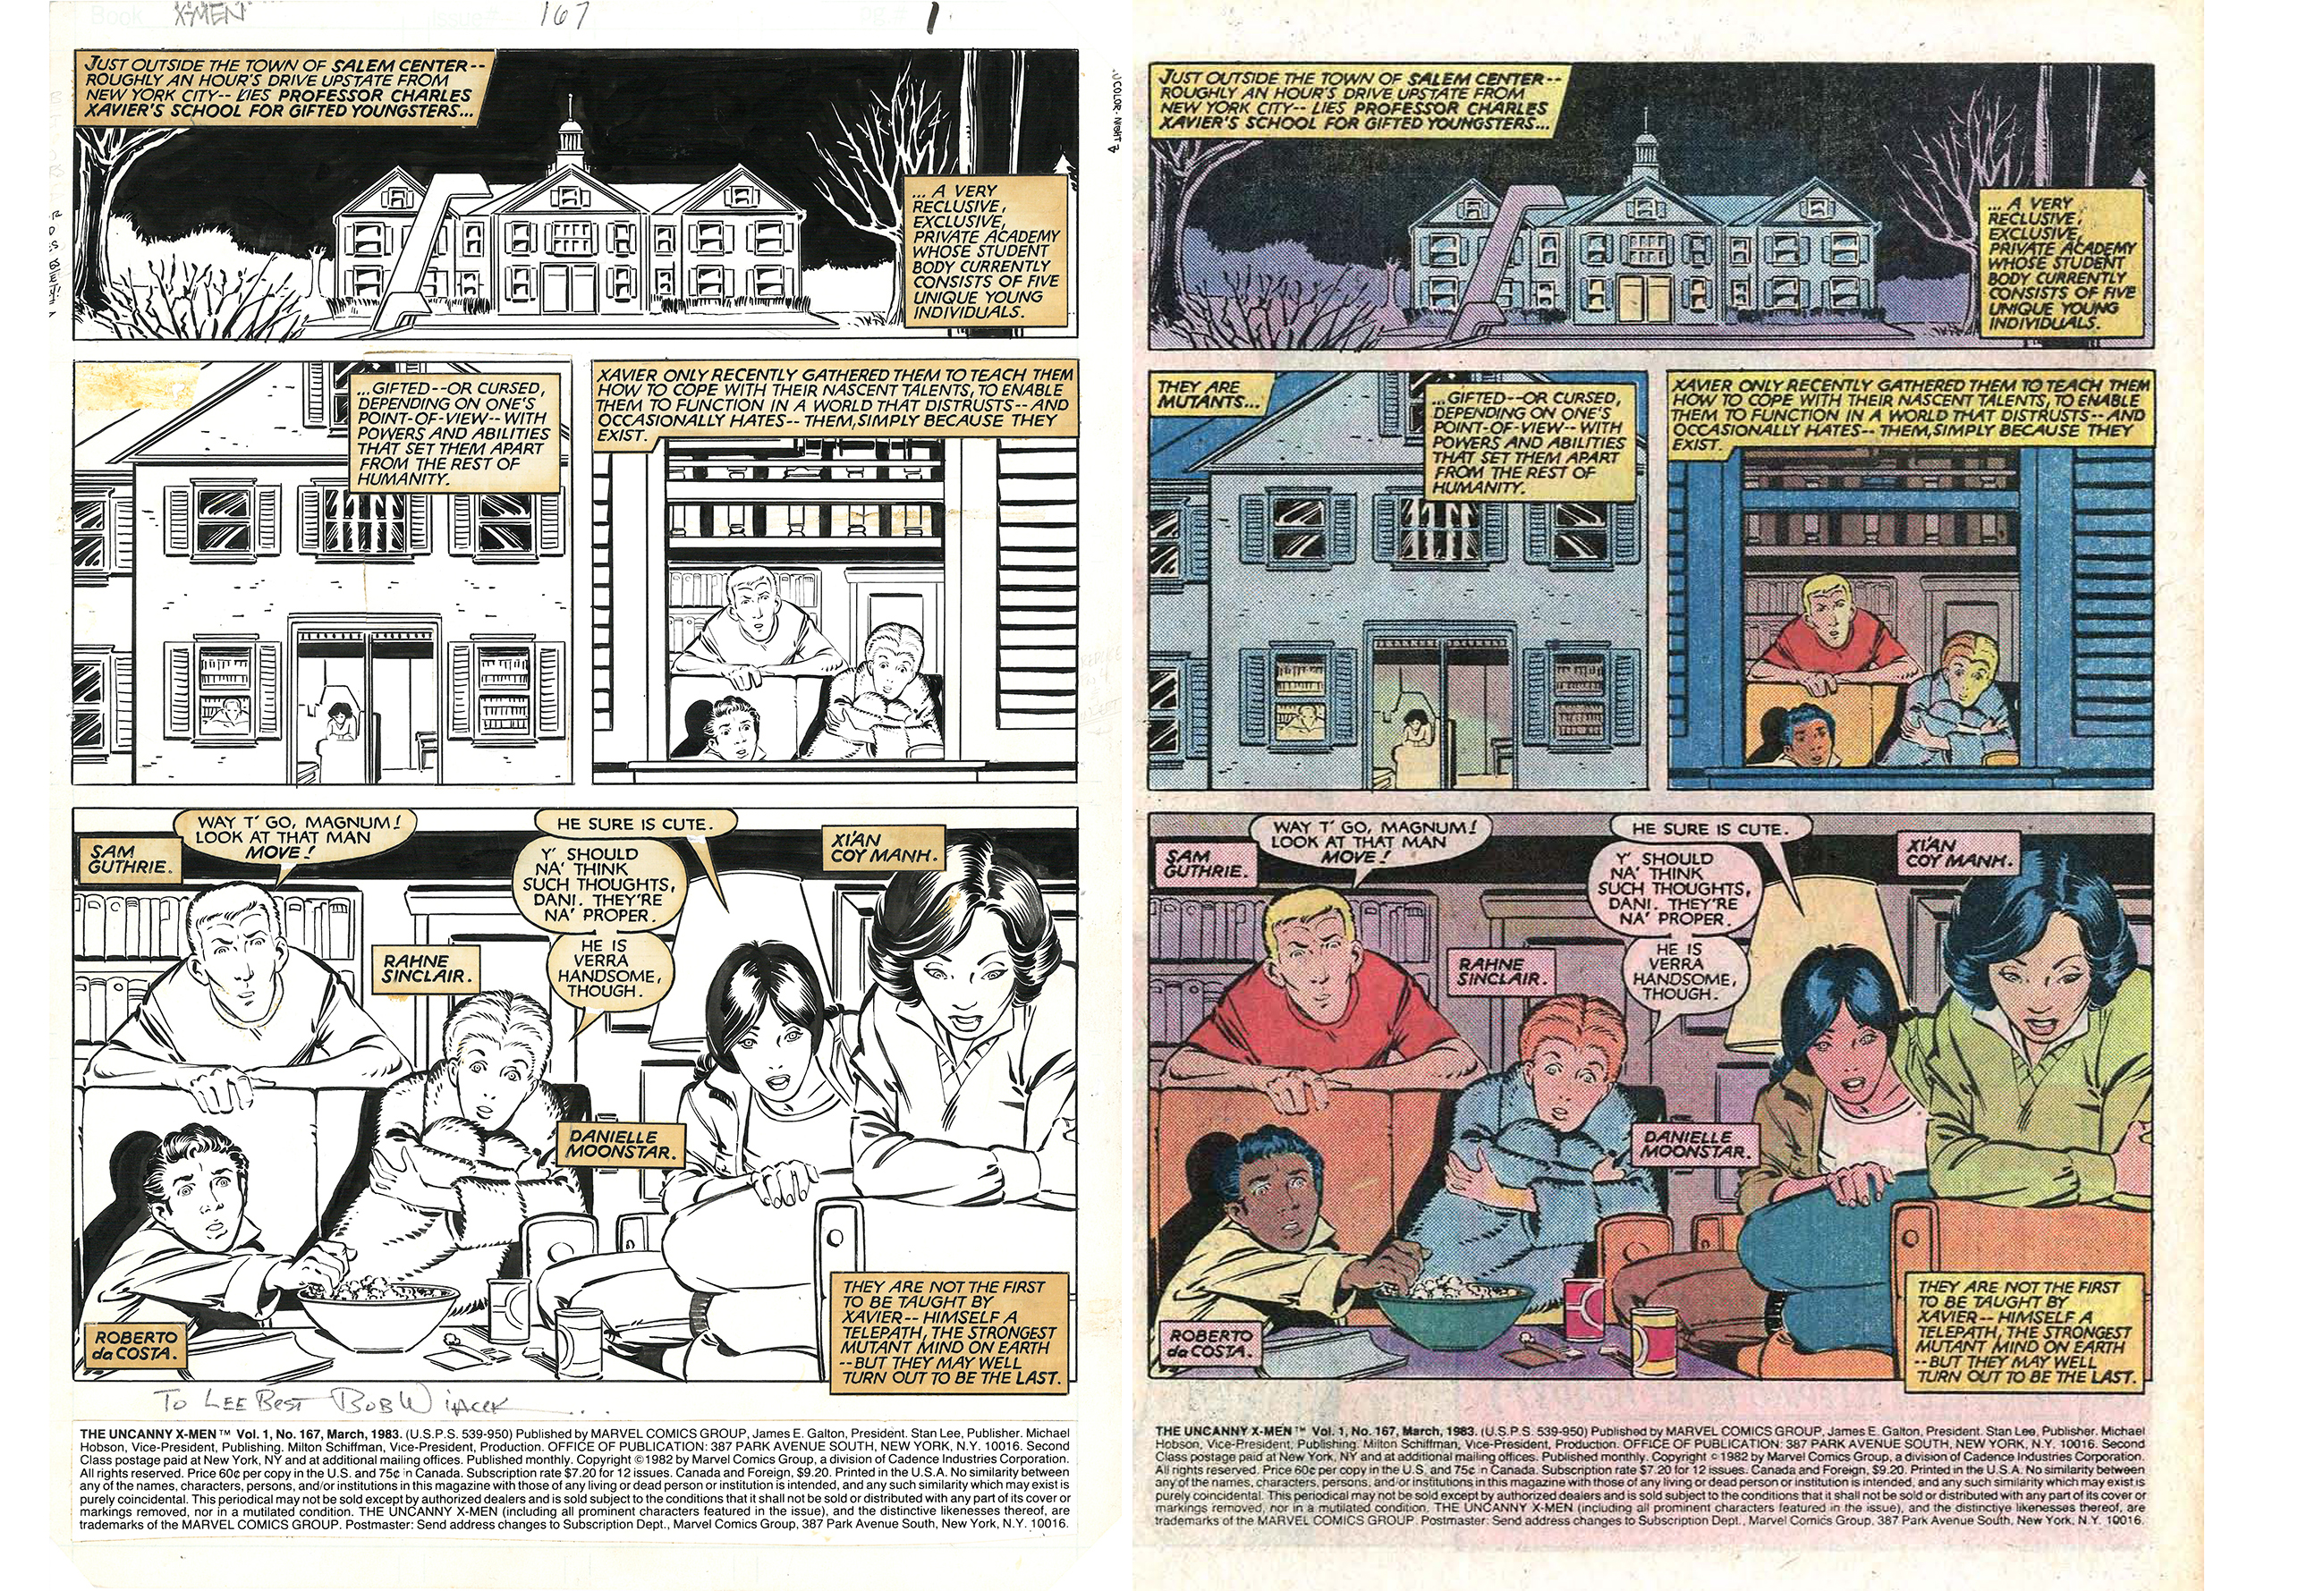 The Uncanny X-Men #167, March 1983. Page 1 | Paul Smith